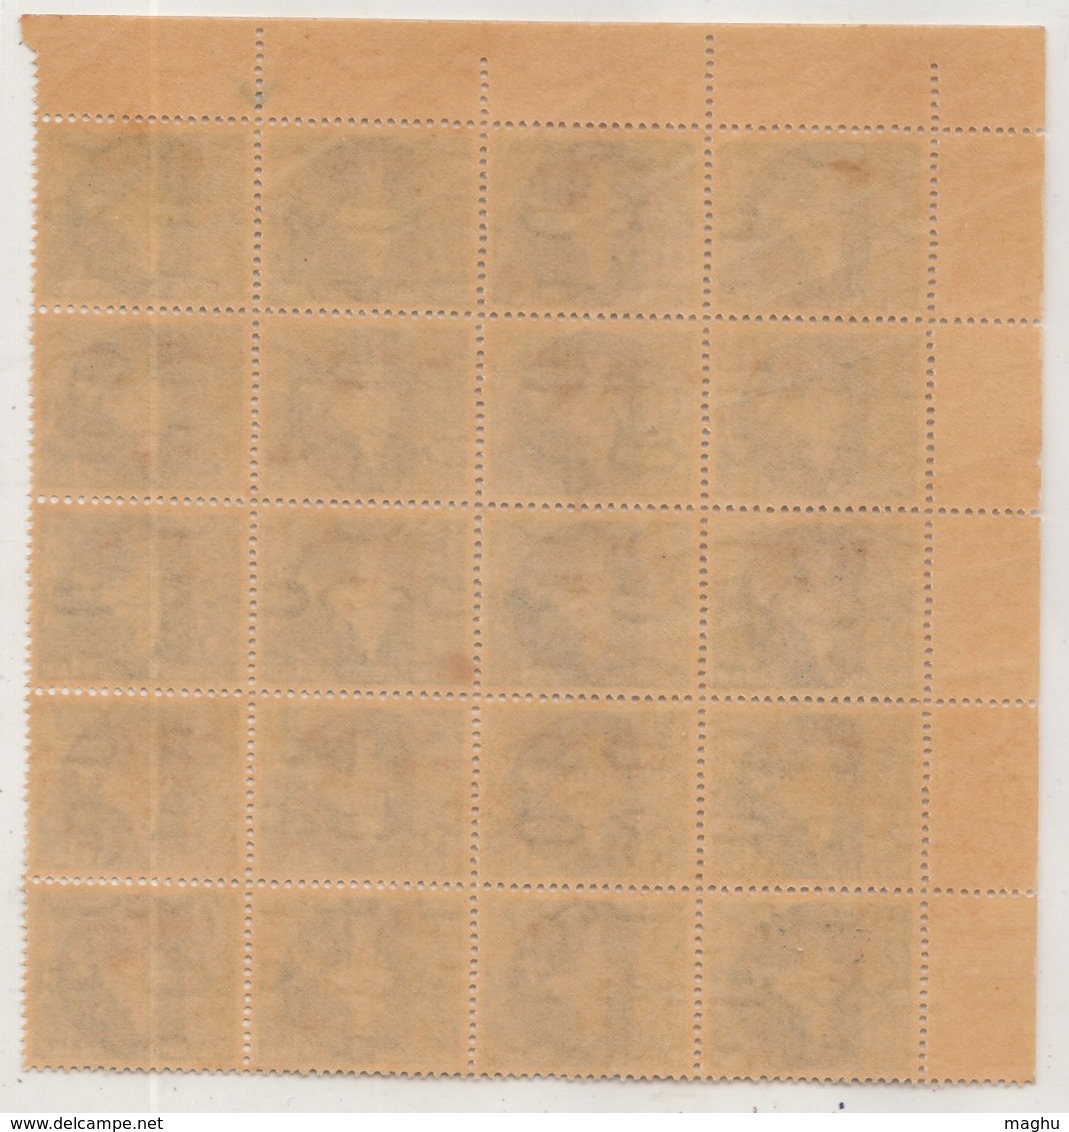 Block Of 20, 1np, Oveperprint Of 'Vietnam' On Map Series, Watermark Ashokan, India MNH 1963 - Franchigia Militare